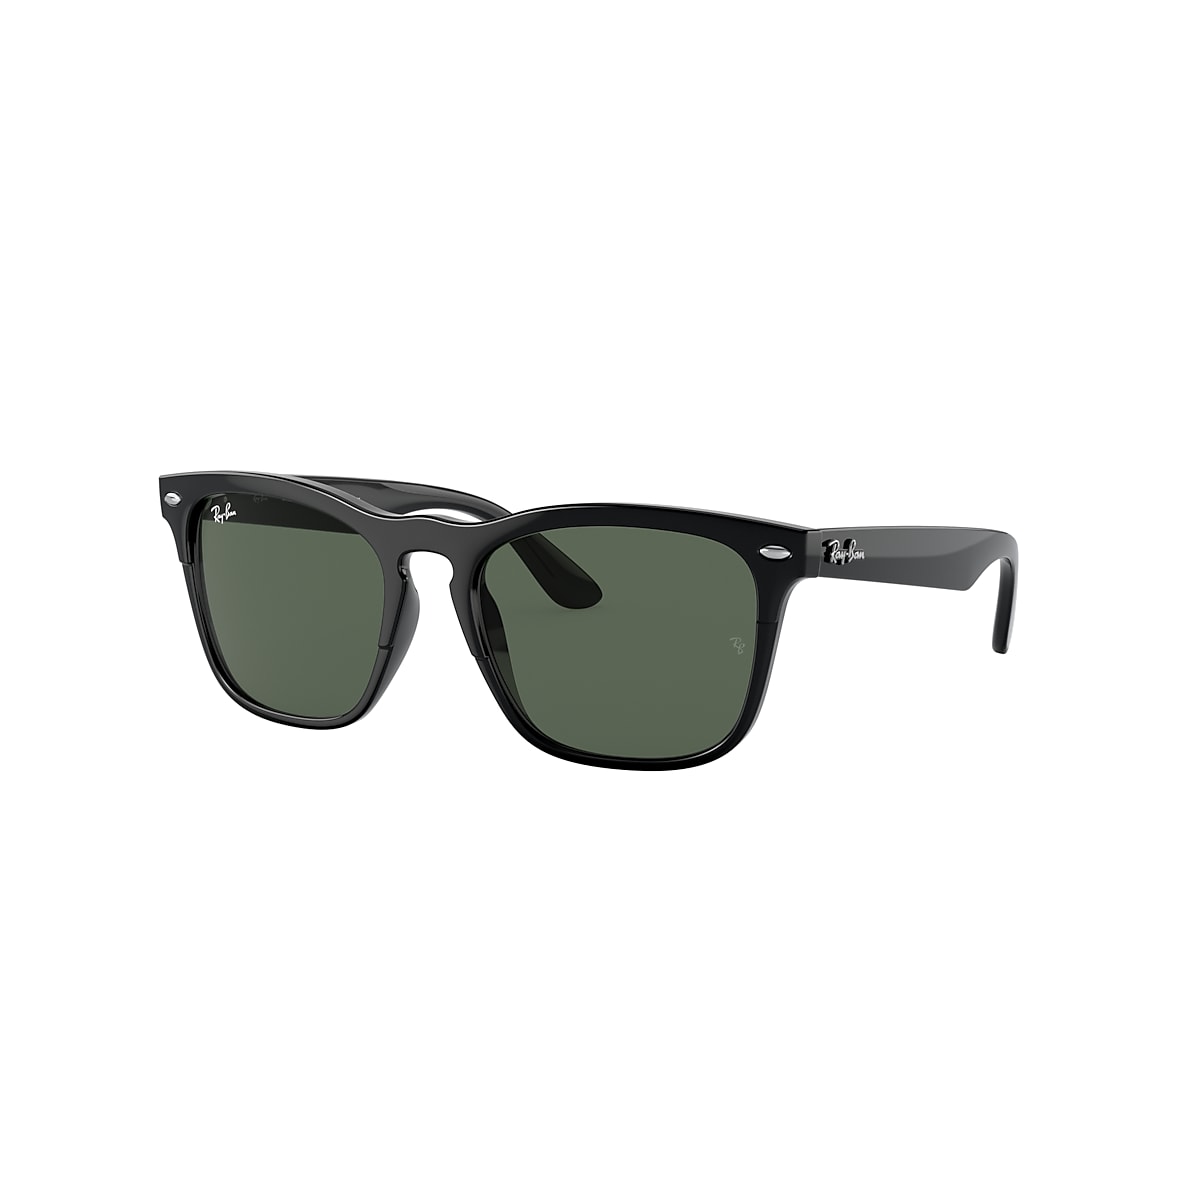 STEVE Sunglasses in Black and Green - RB4487 | Ray-Ban® EU